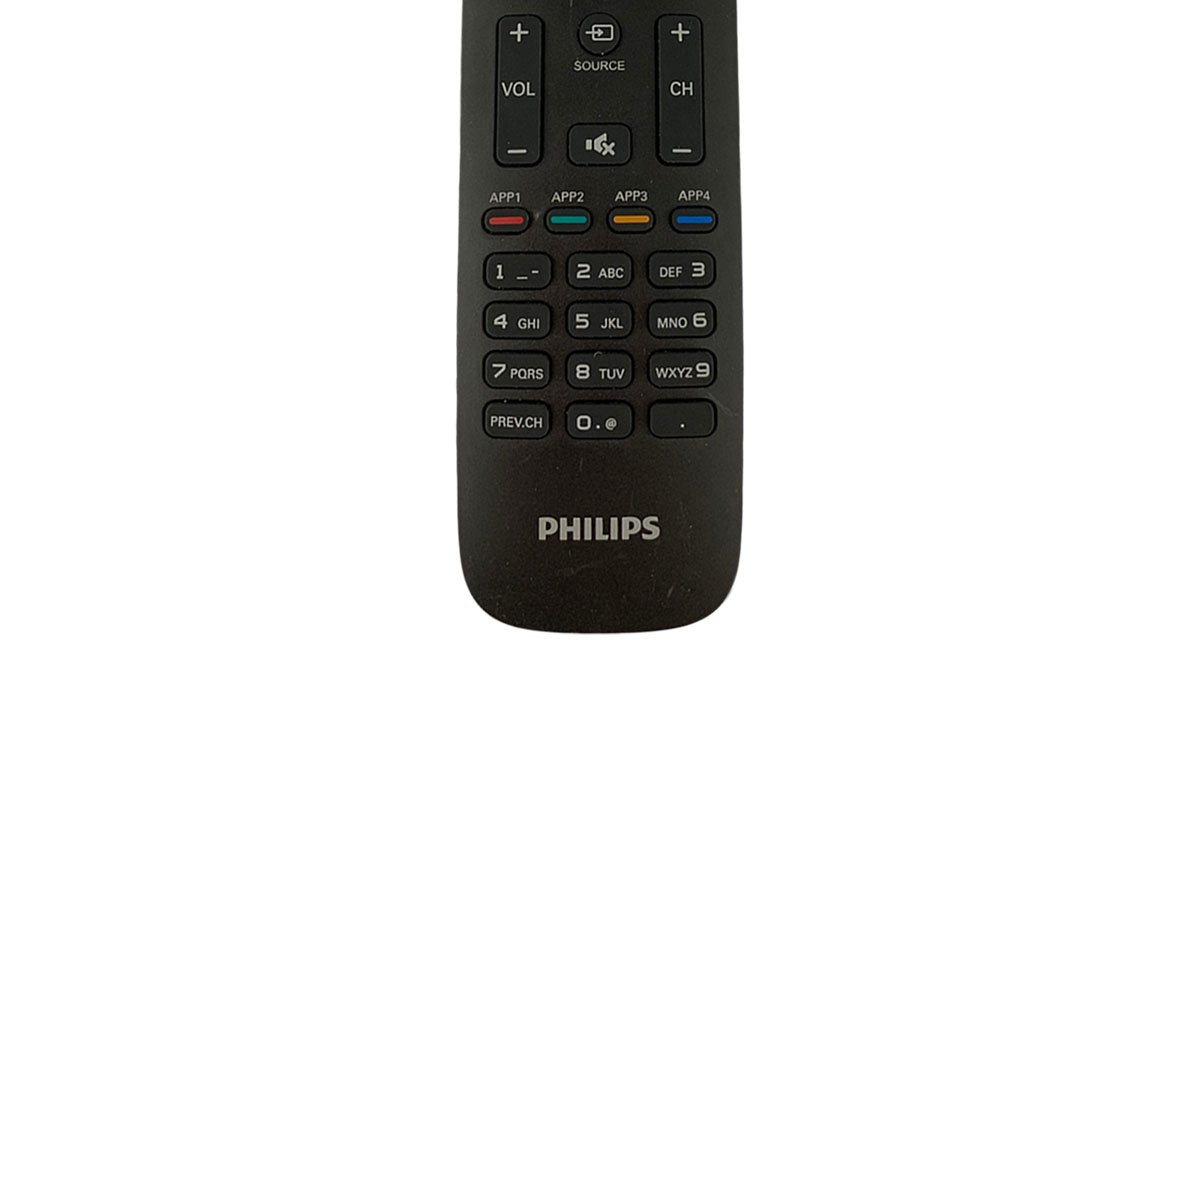 Original TV Remote Control for Philips 65PFL6902F7 Television (USED) | eBay